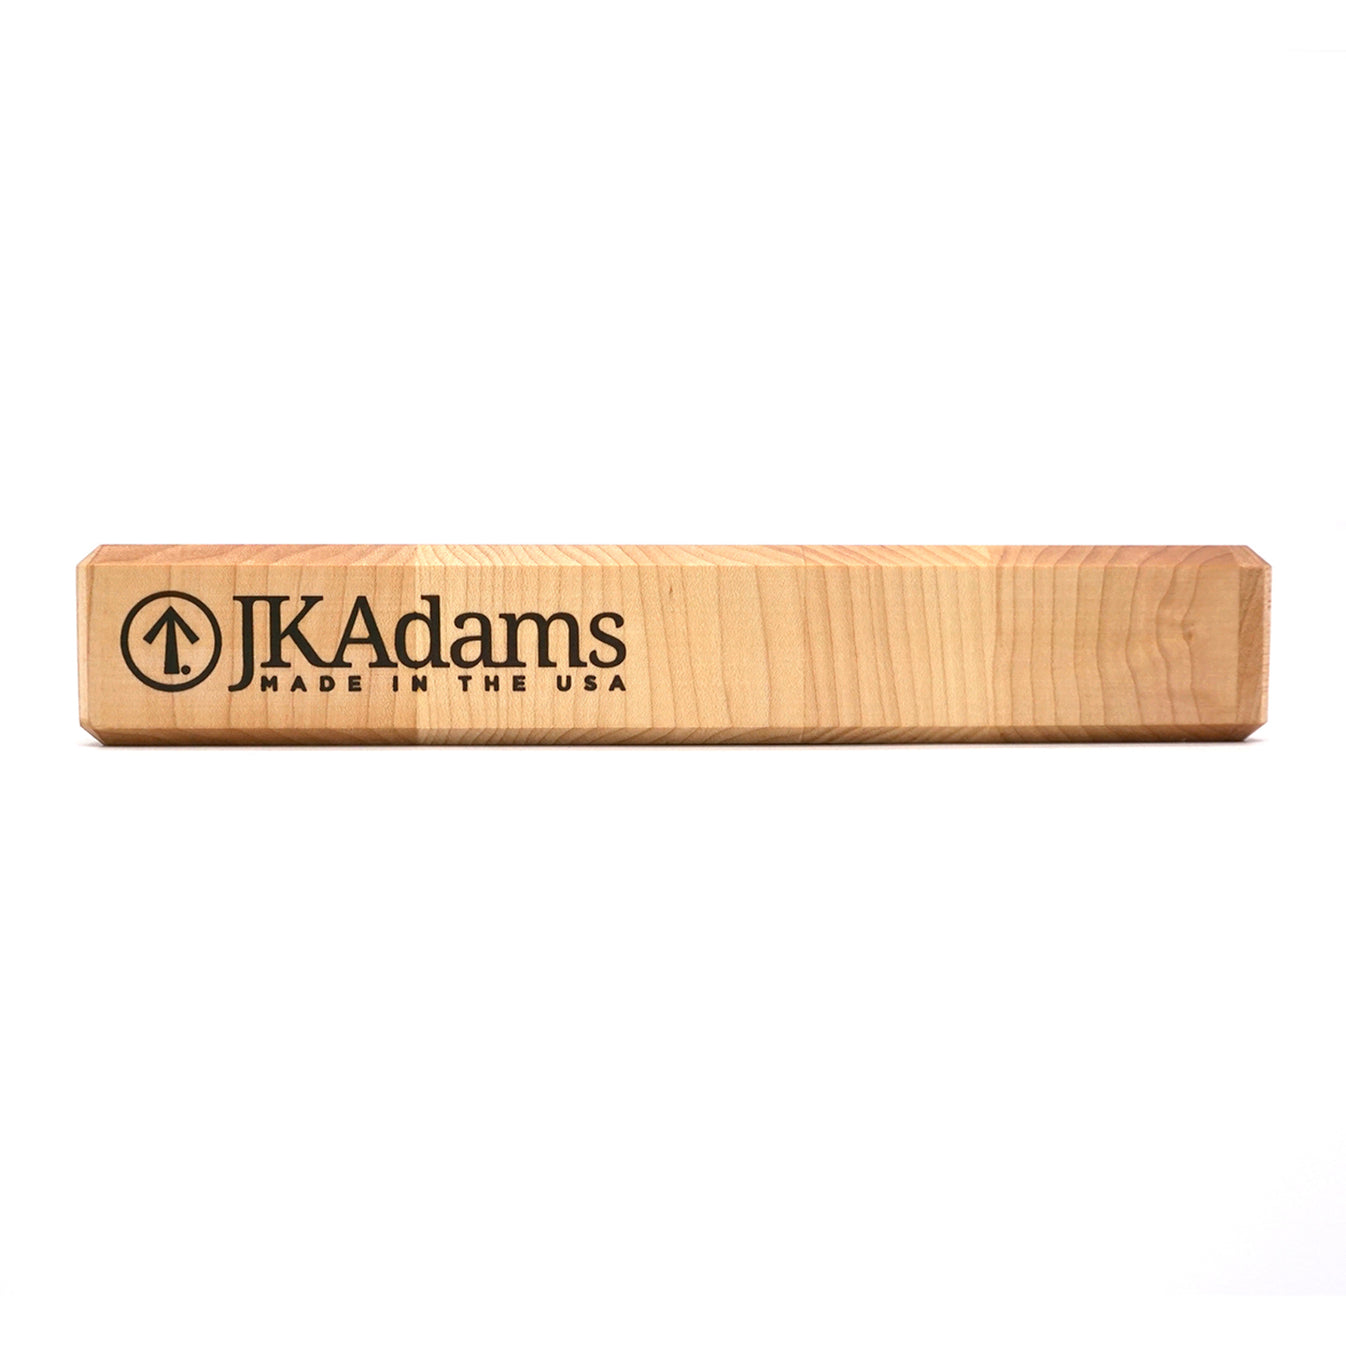 JK Adams Professional End Grain Maple Board - 12" x 12" x 2"